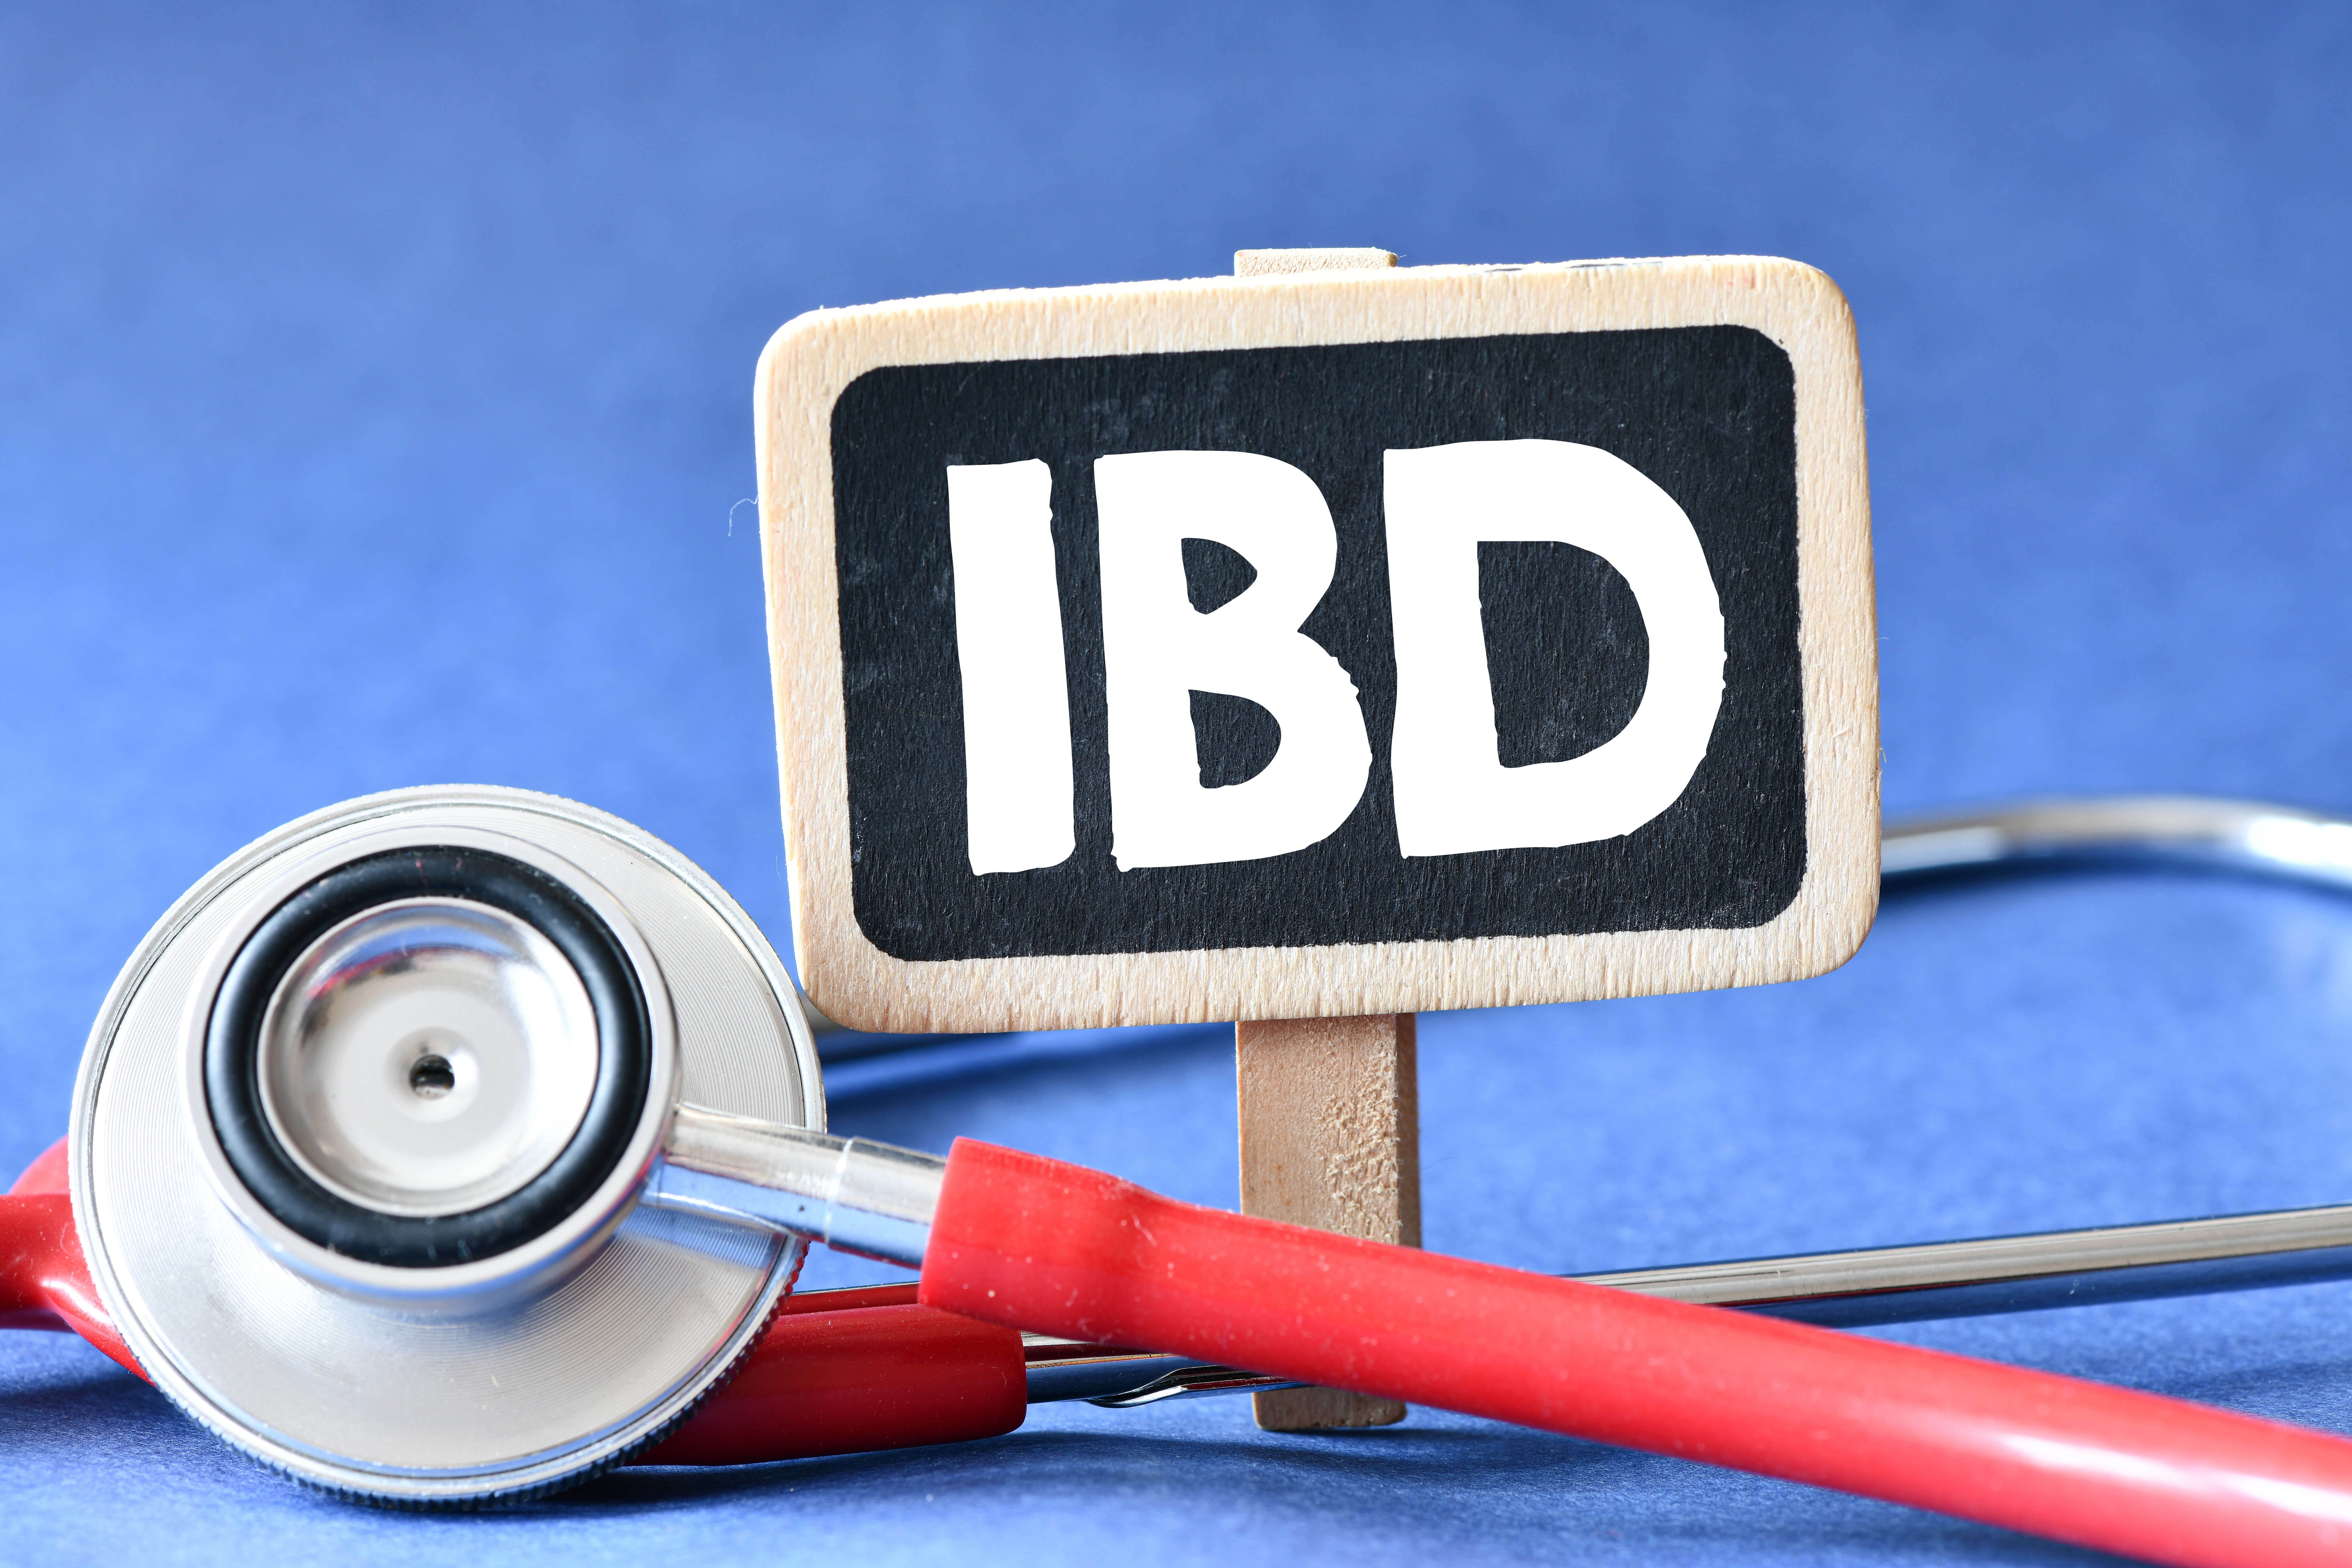 Blackboard showing IBD with stethoscope